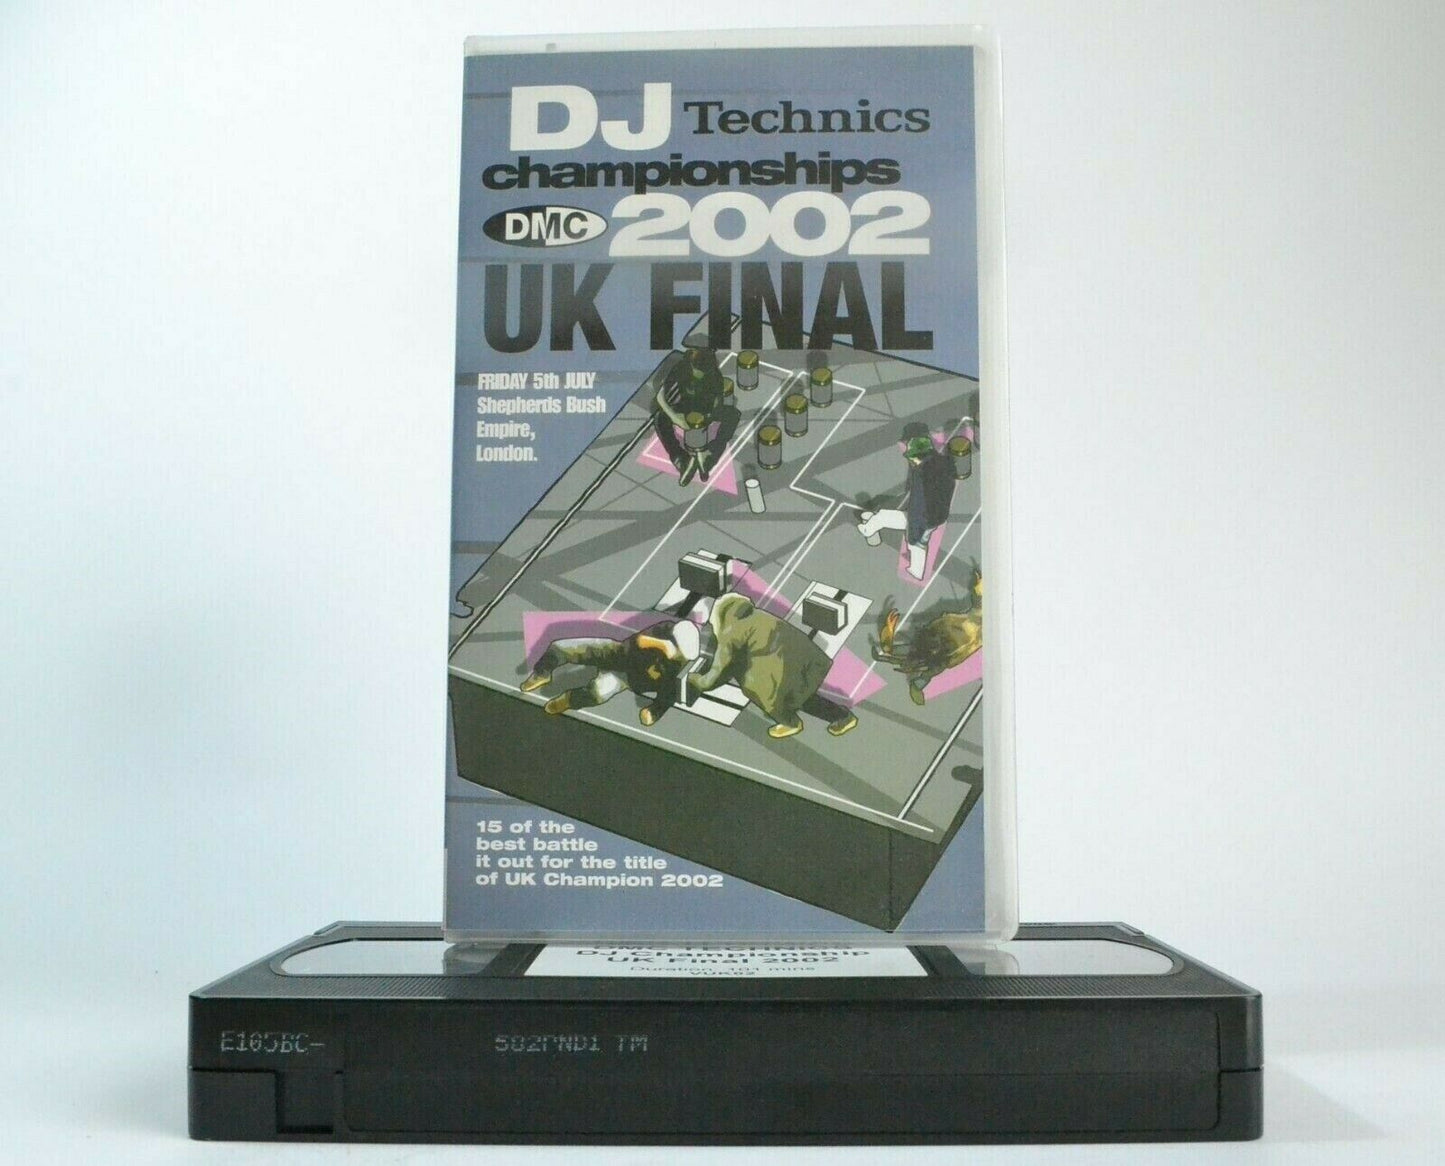 DMC Technics DJ Championship 2002 UK Final: Shepherds Bush Empire (K Flash) VHS-